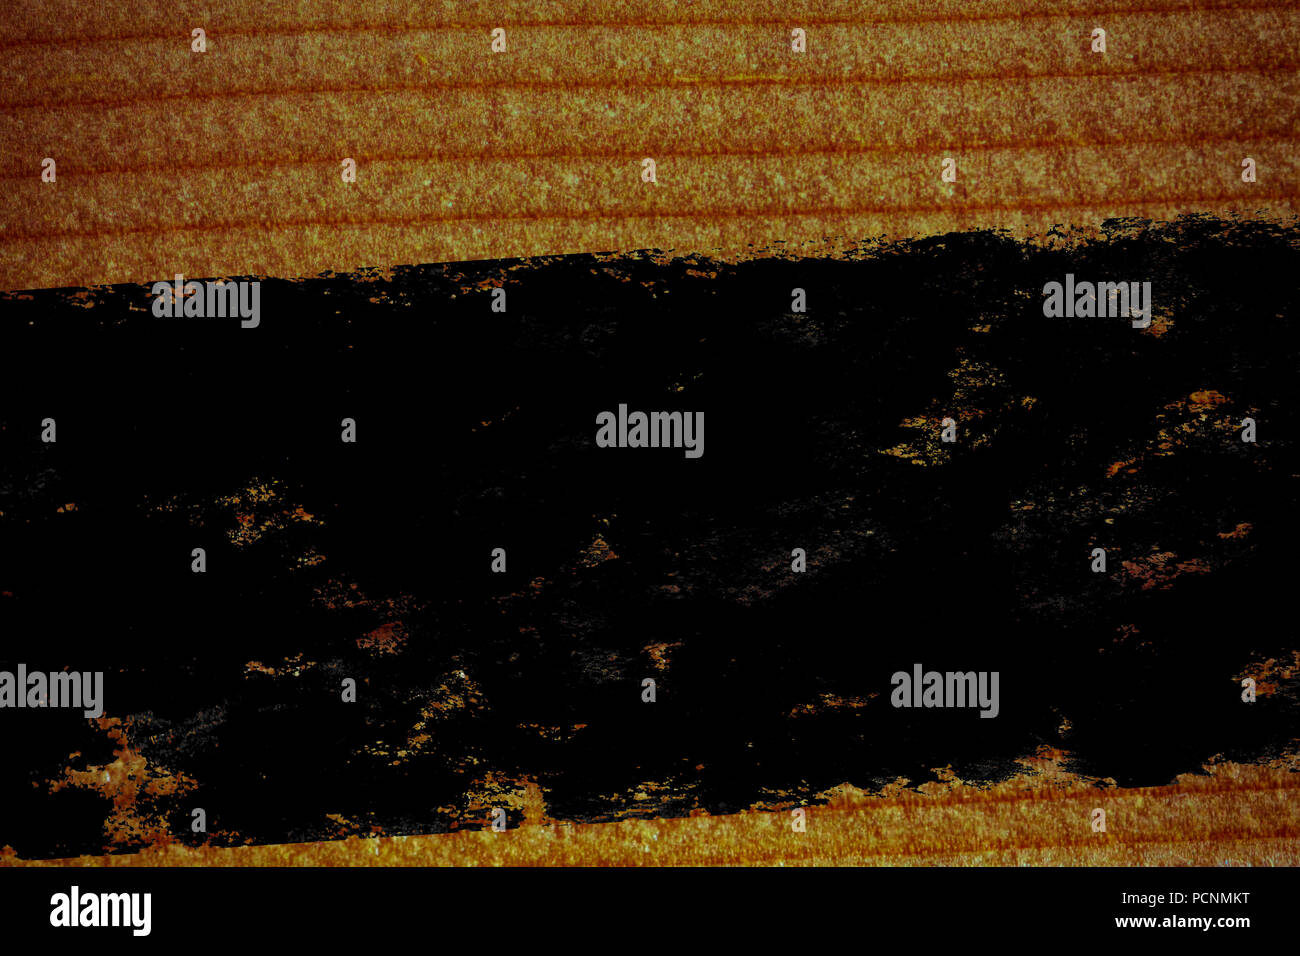 Grunge technik Holz- Textur, leere Holz Hintergrund. Stockfoto